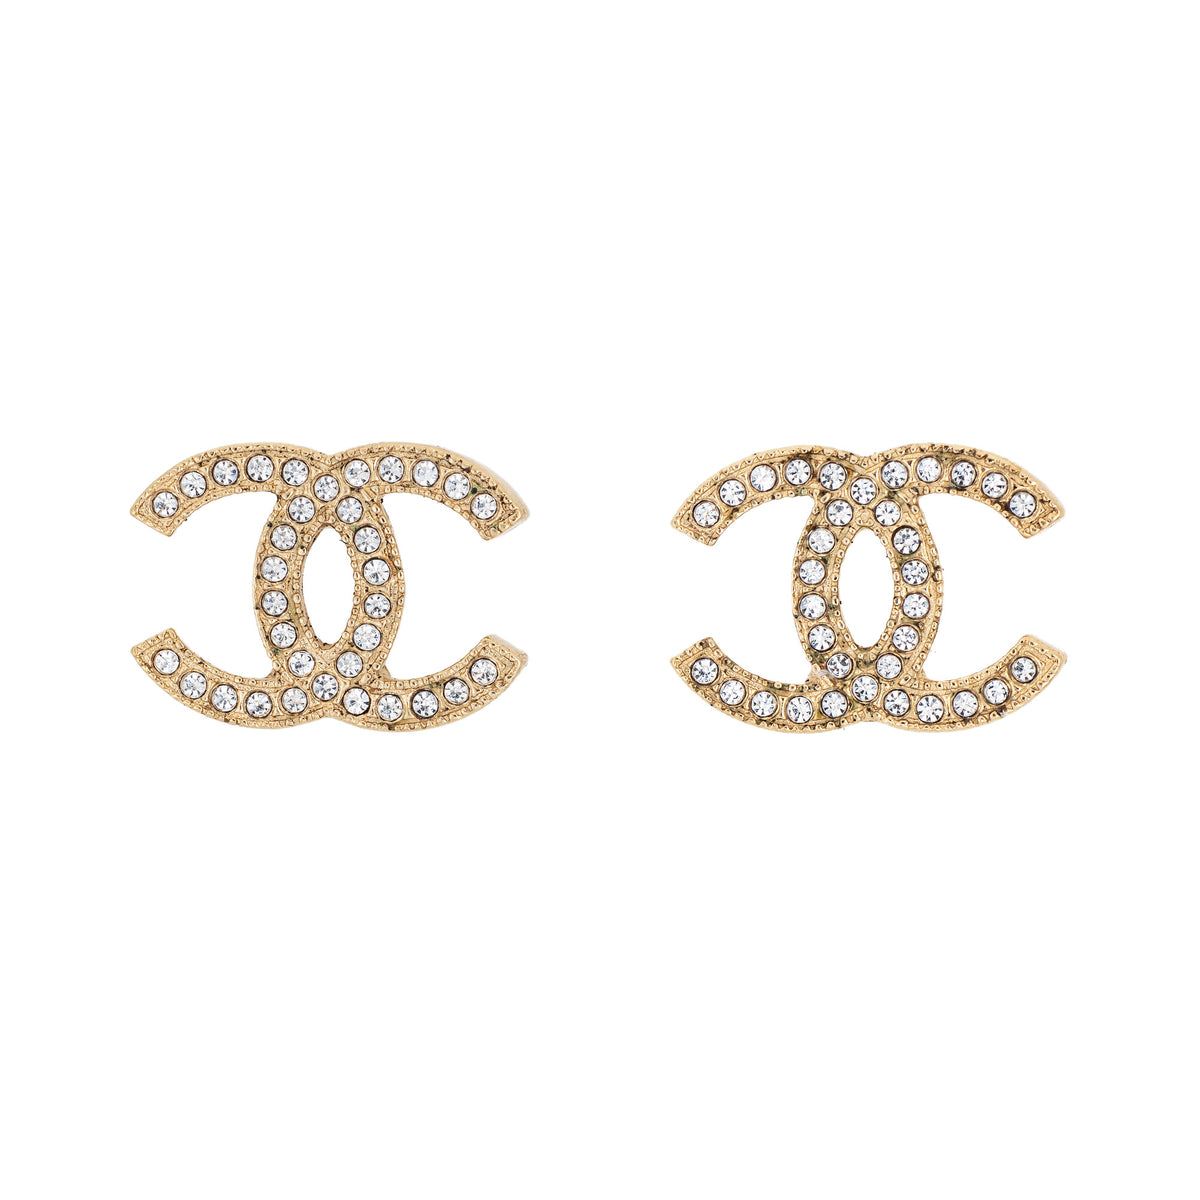 2014 Chanel CC Logo Crystal Earrings Studs Yellow Gold Tone